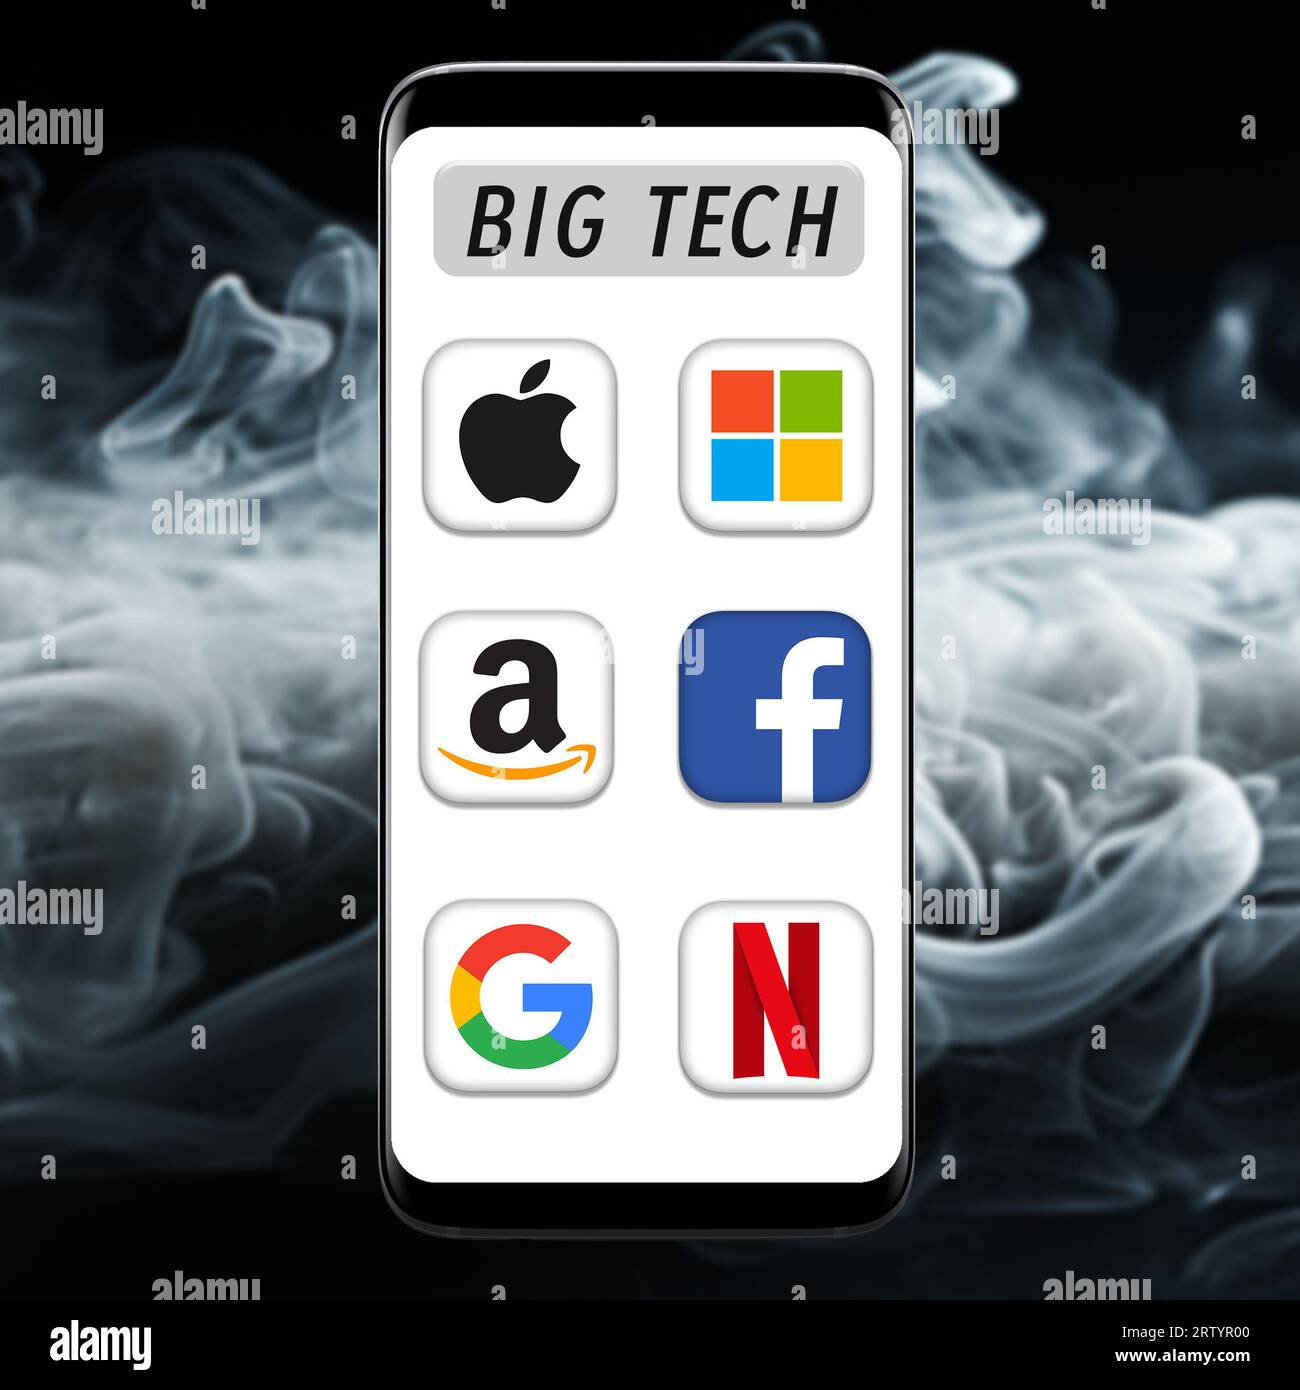 Big Tech - Biggest Technology Companies Stock Photo